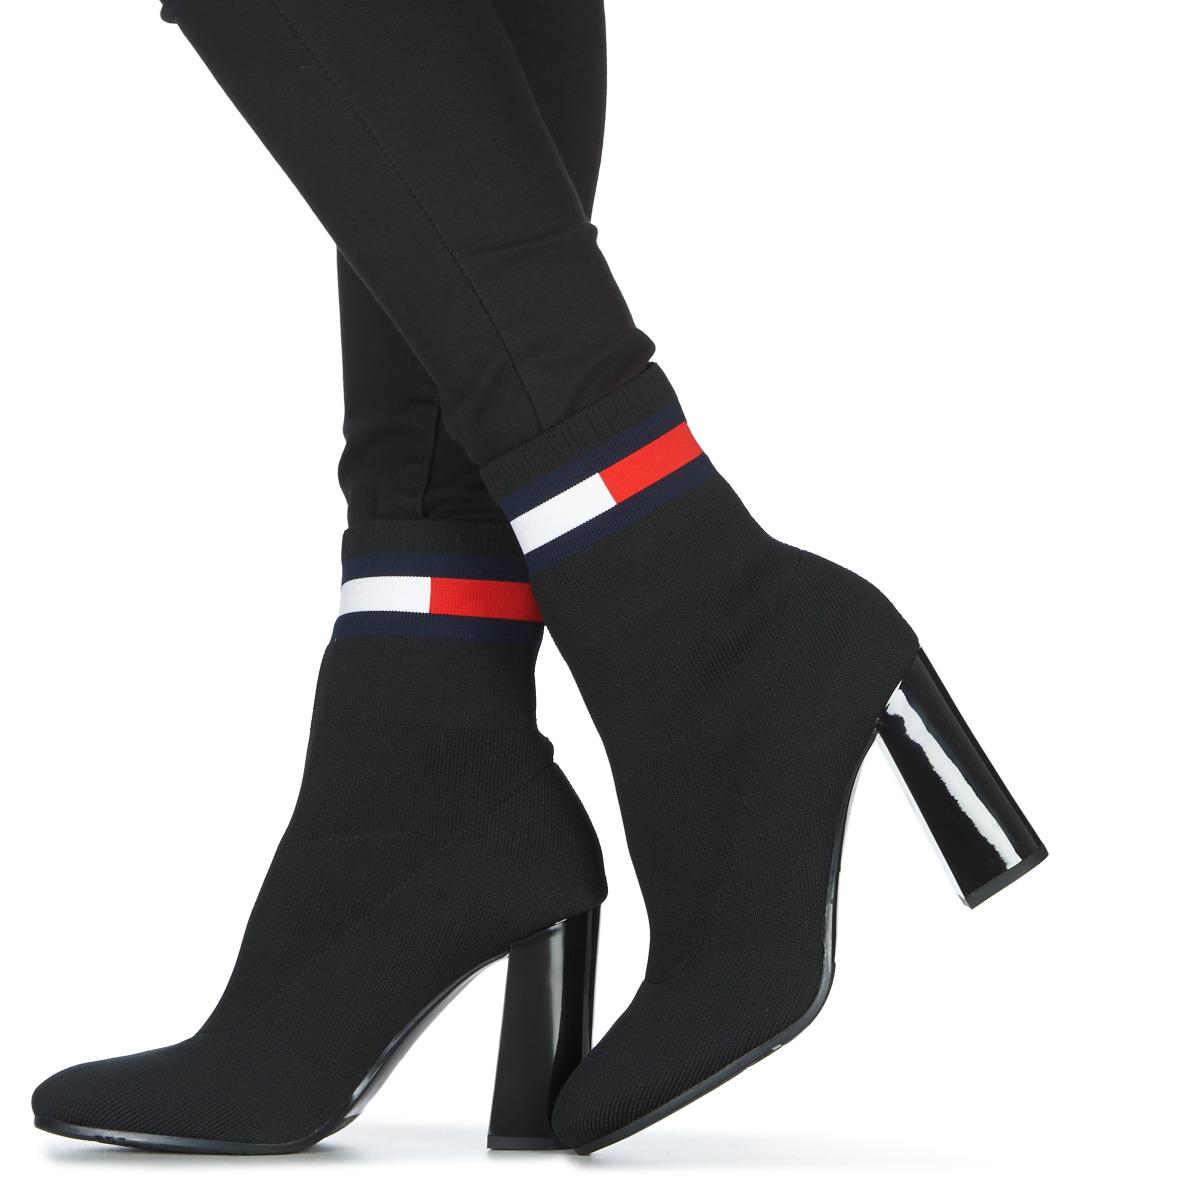 Black Tommy Hilfiger Sock Boots Discount, 59% OFF | www.jungle4x4.com